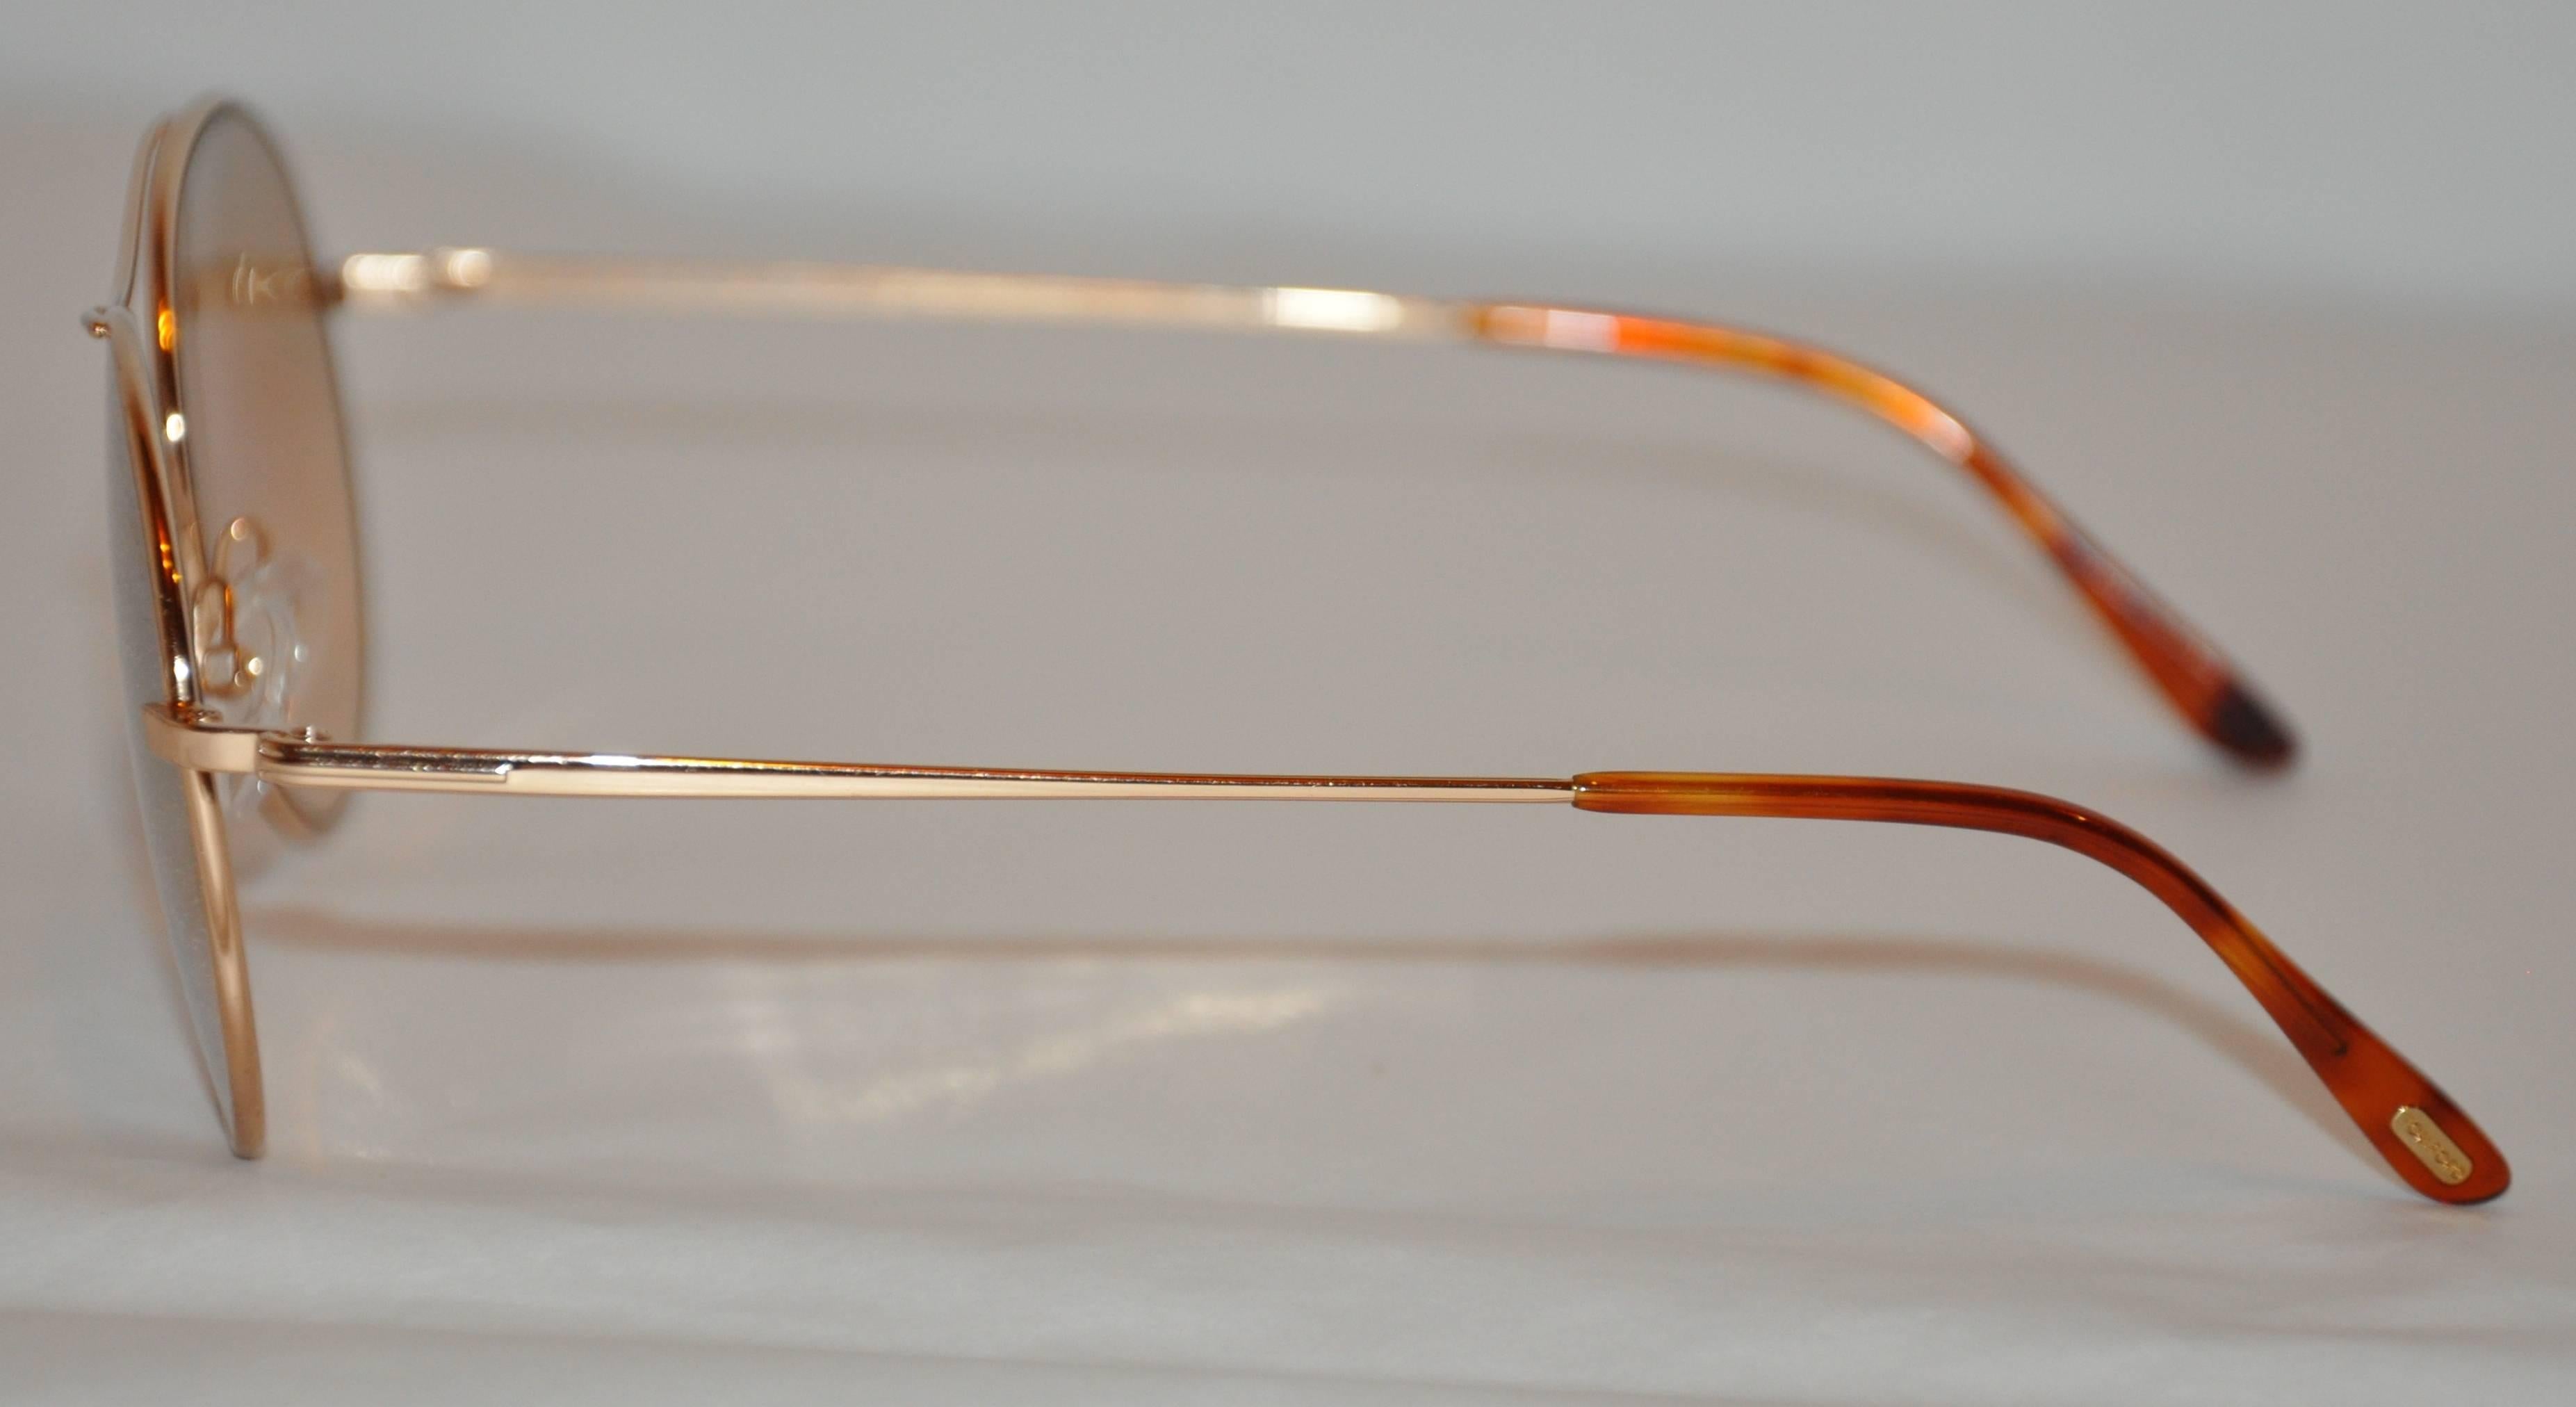           Tom Ford gold hardware sunglass frames measures 5 1/2